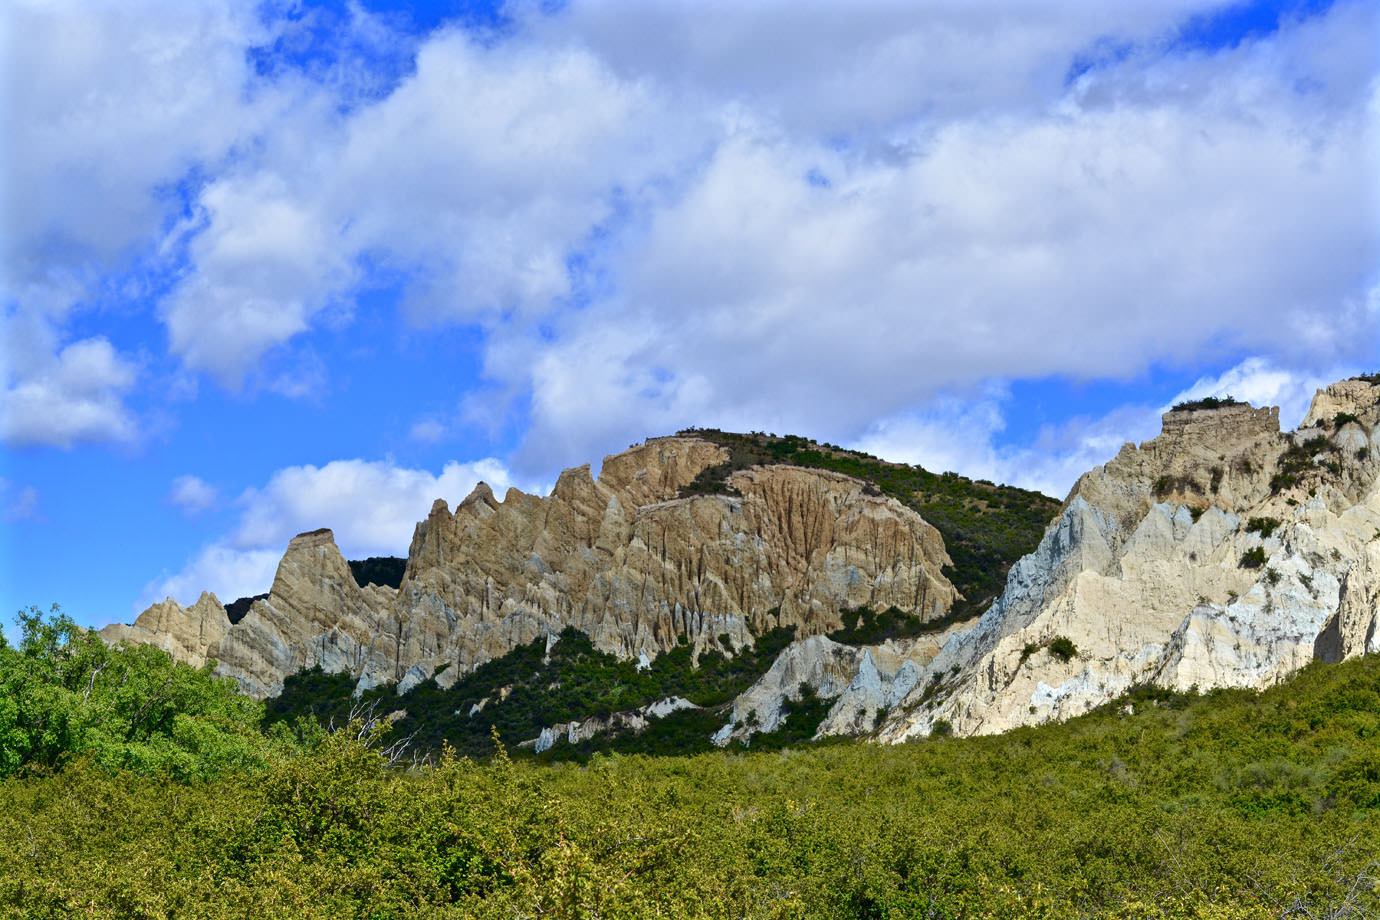 Clay Cliffs rock formation next to Omarama